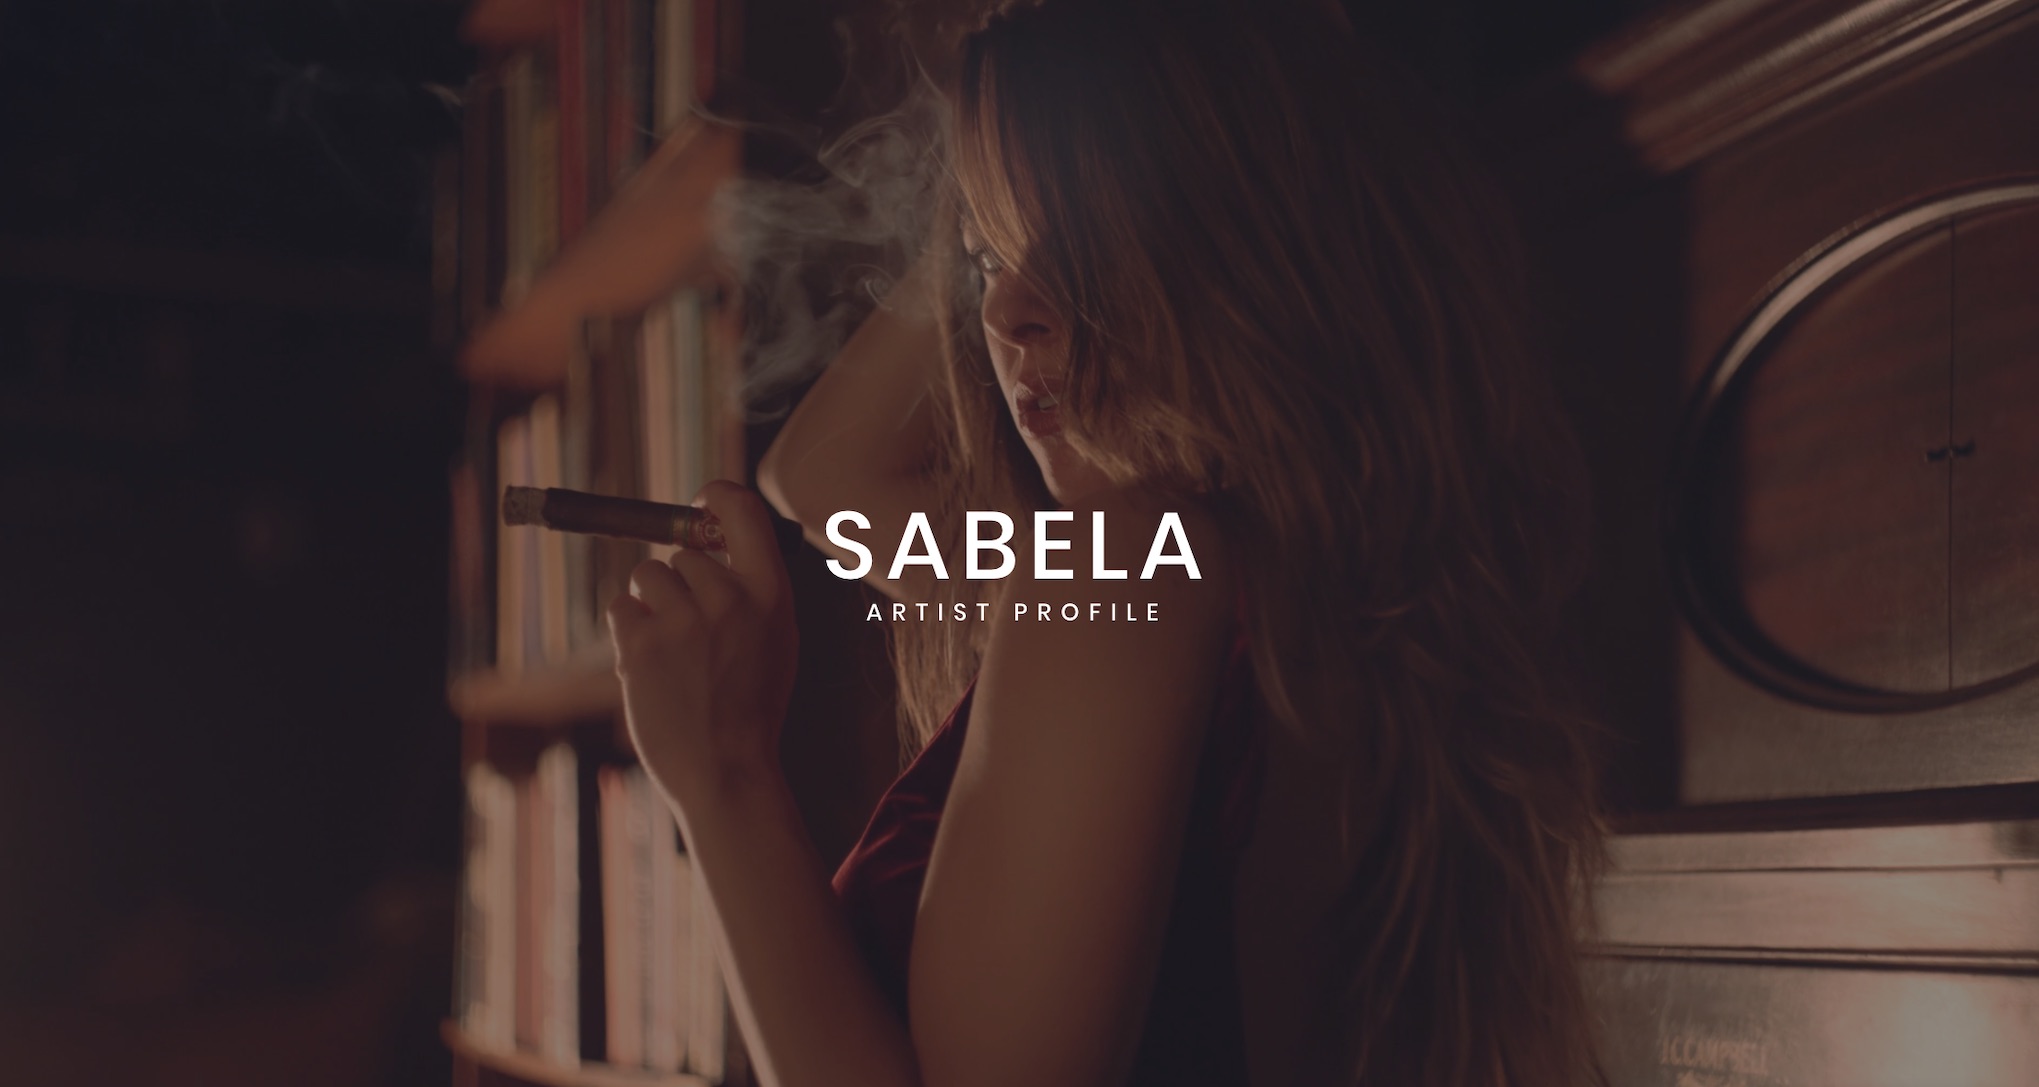 Sabela Artist Management Services White Sabela Artist Profile logo on background of side profile of woman smoking a cigar posing for camera